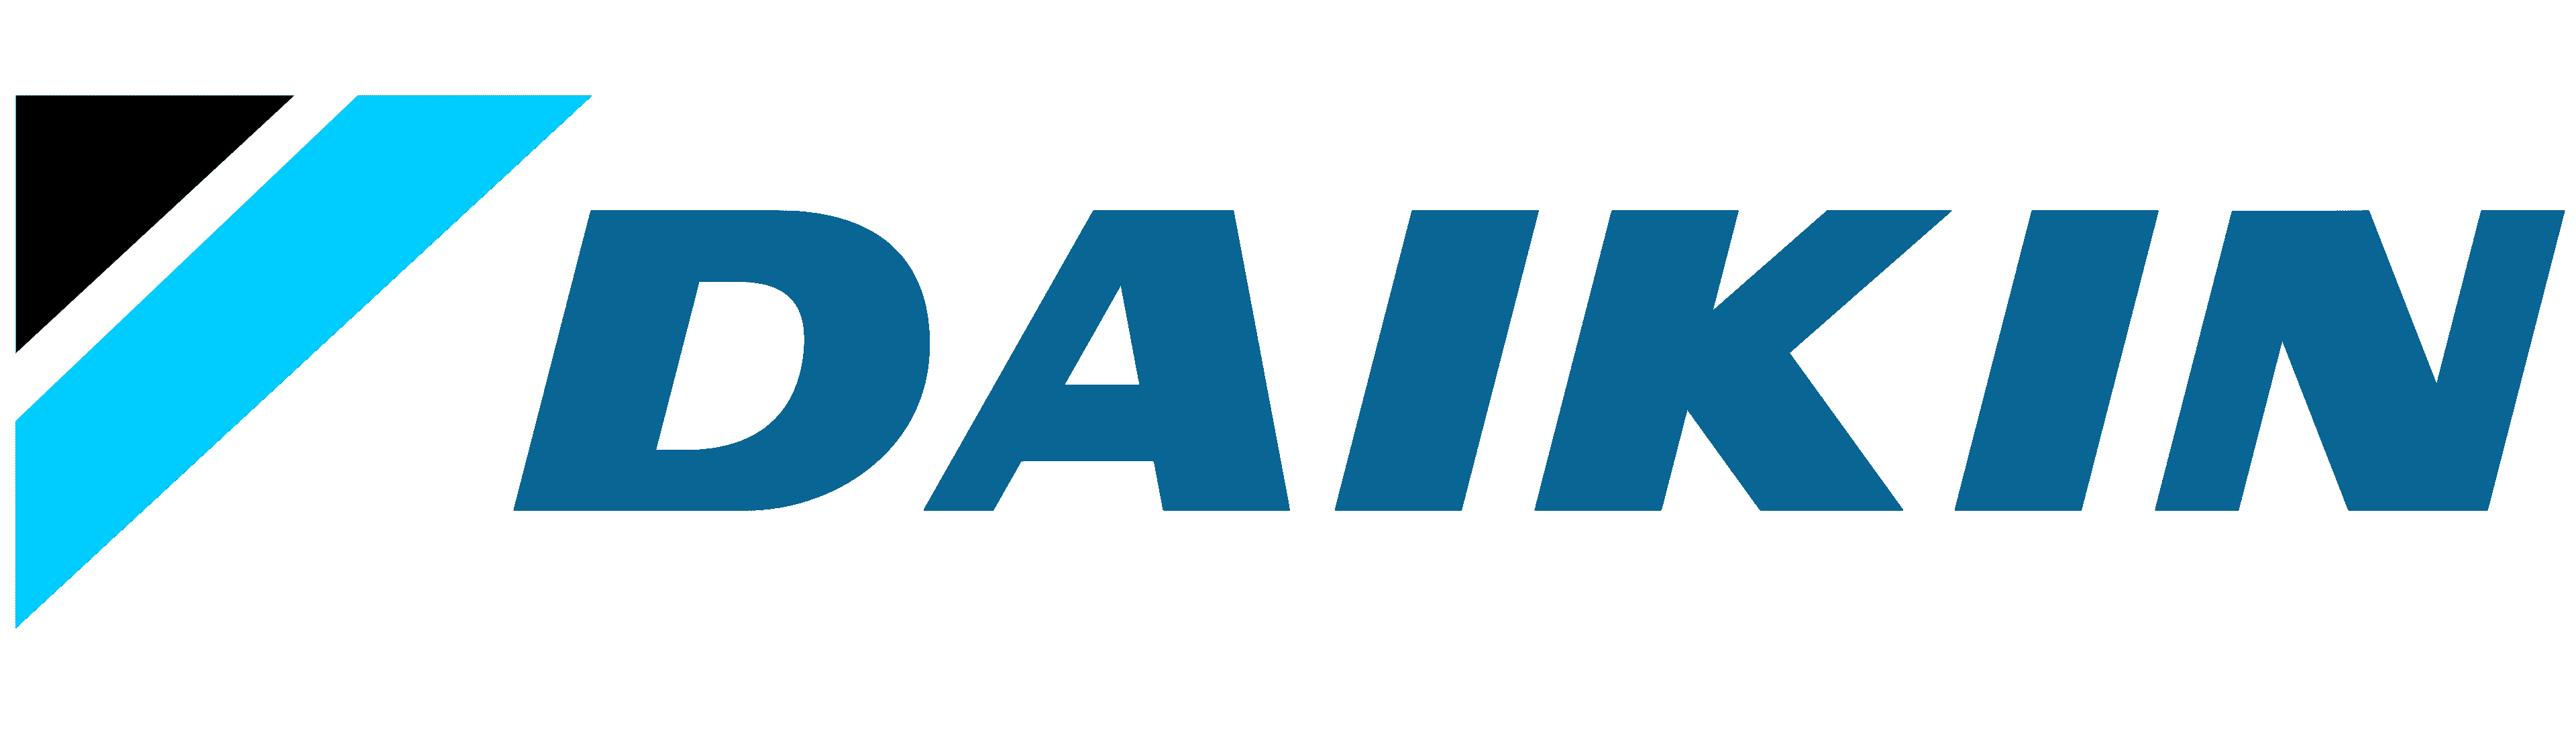 Napier-Heat-Pumps-Daikin-Logo